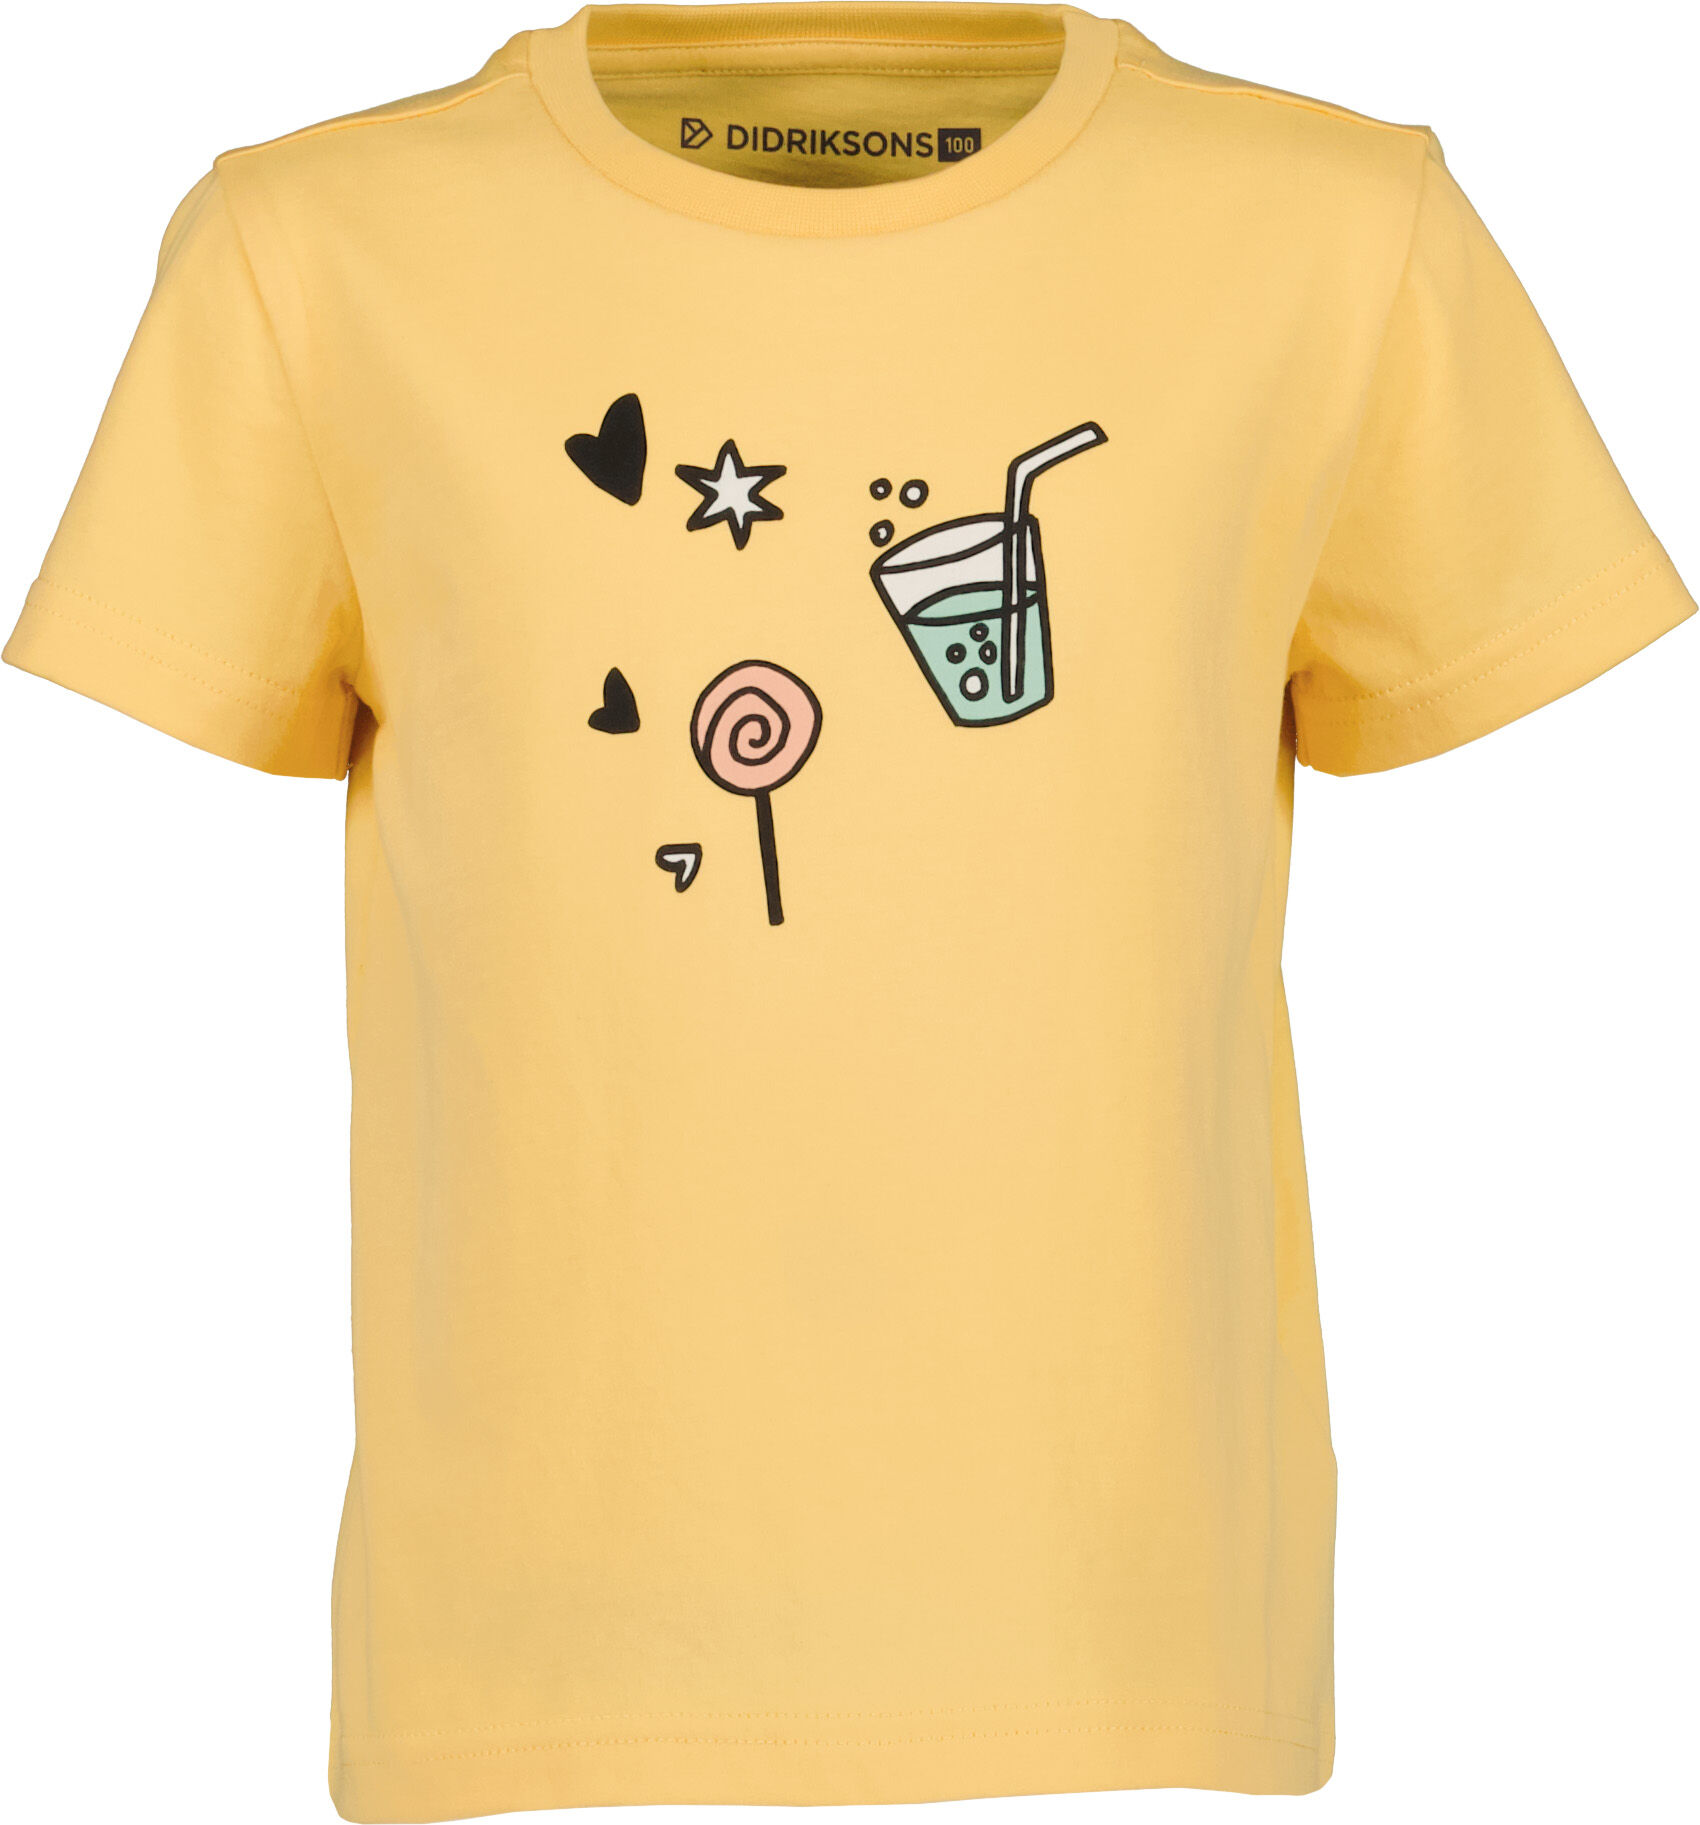 Didriksons Mynta T-shirt Creamy Yellow 100